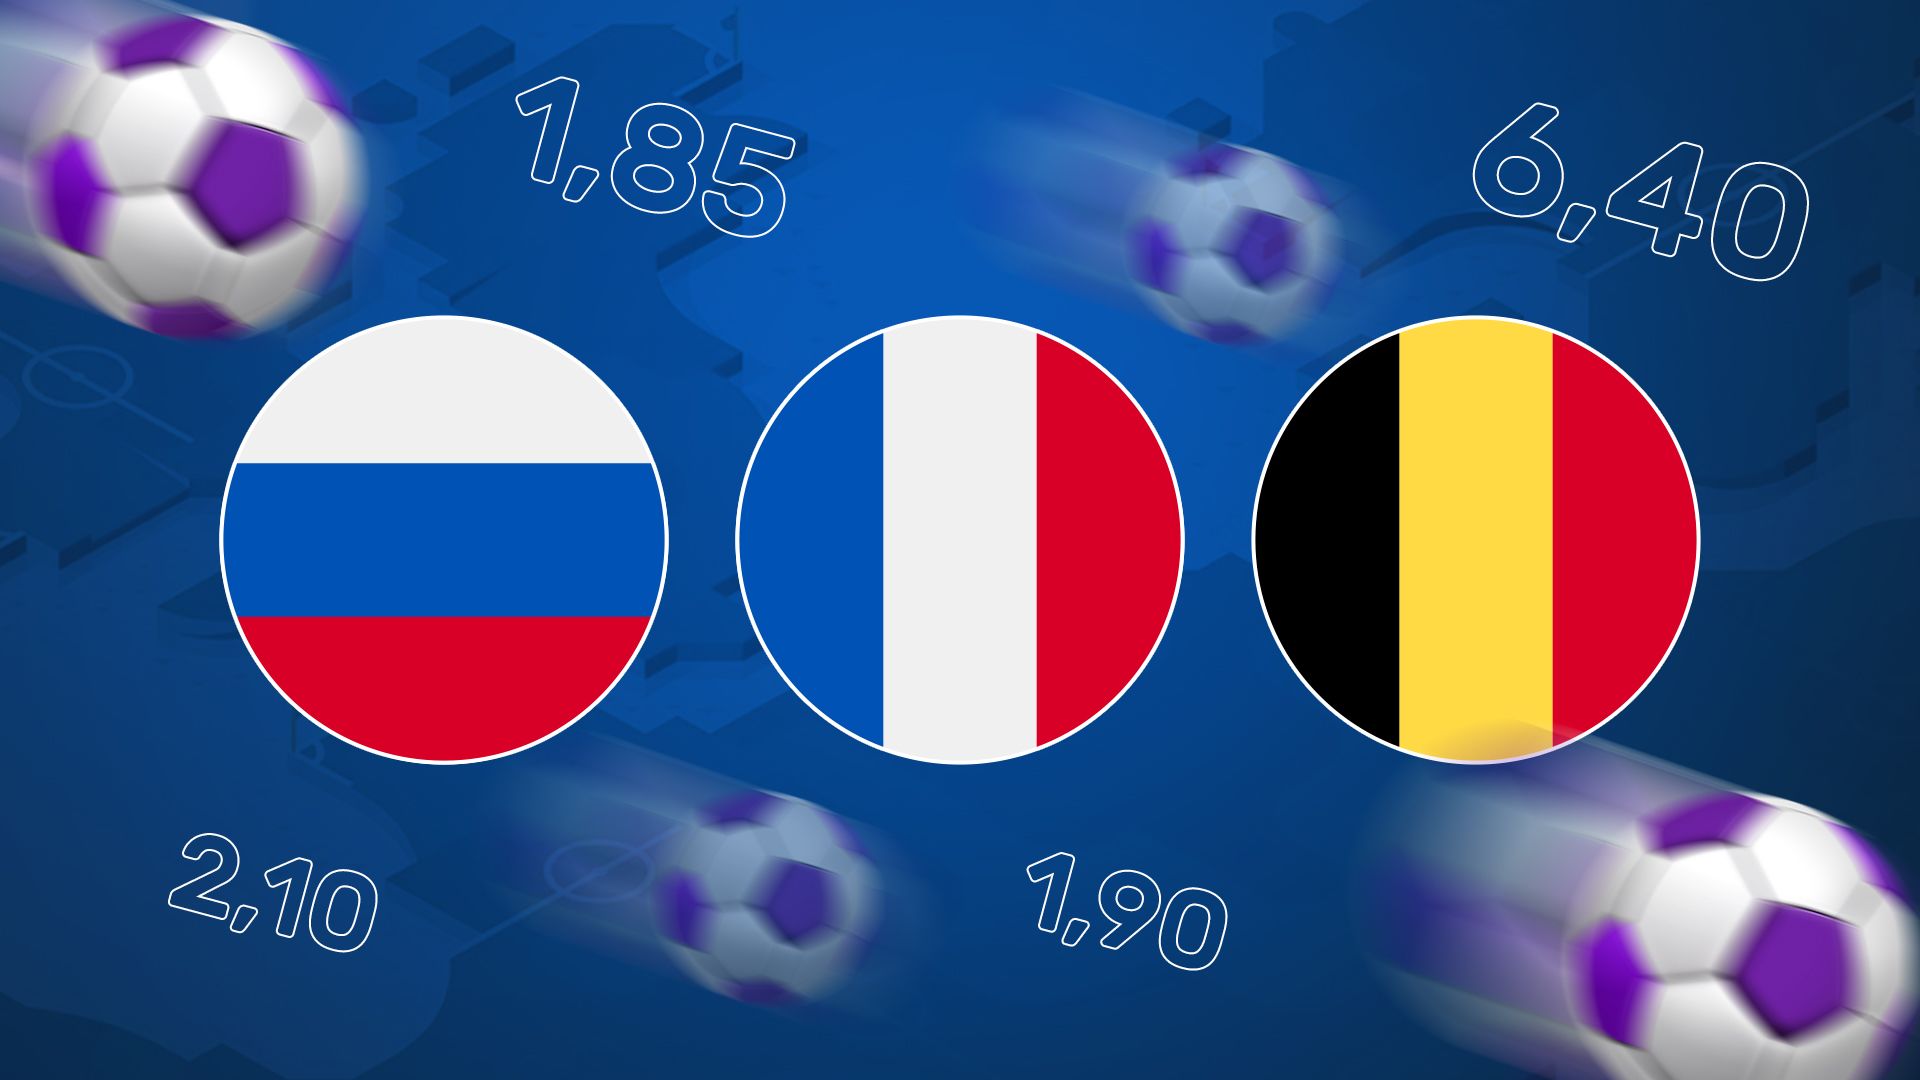 Курс Евро #1: как ставят на Евро-2020. Игроки не верят в Россию и грузят на Францию и Бельгию